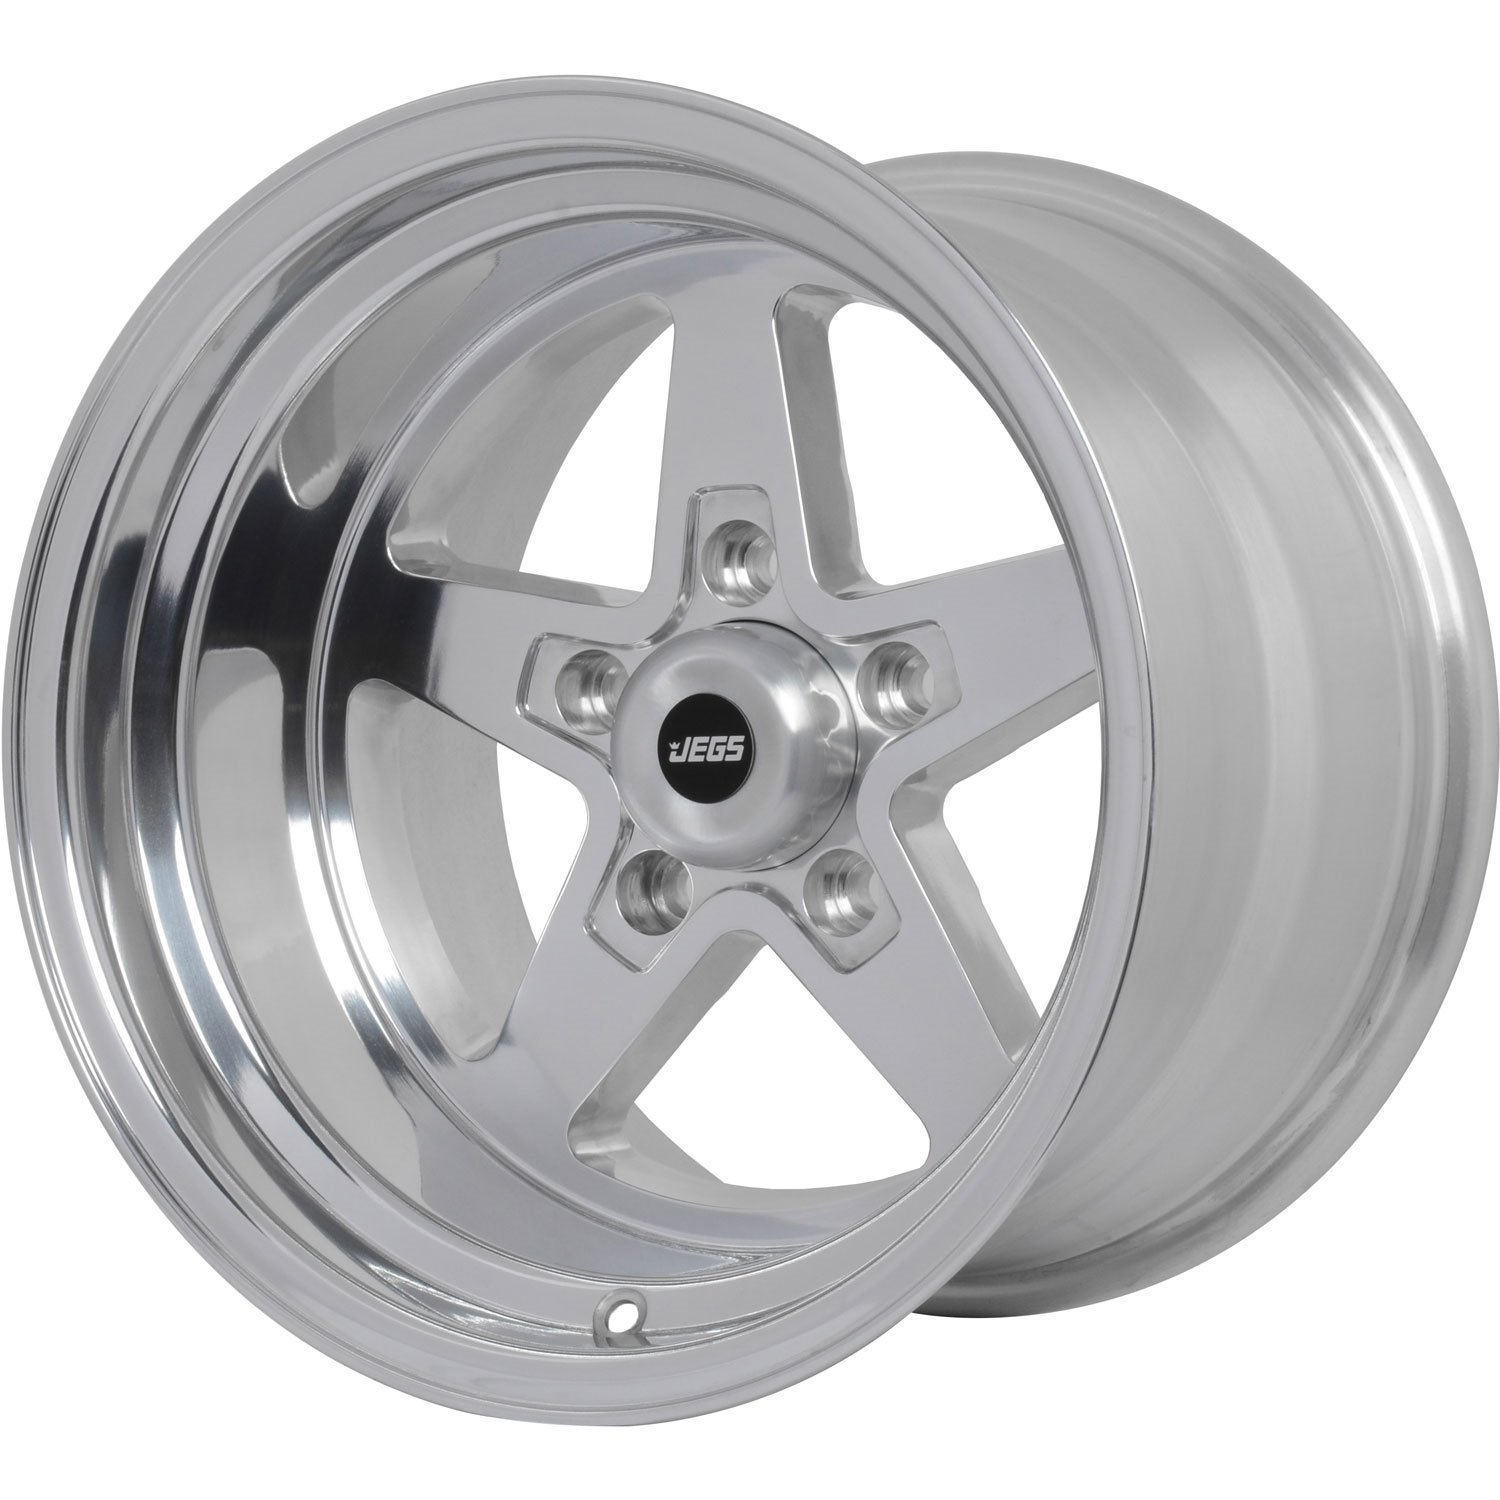 SSR Star Wheel [Size: 15" x 10"] Polished